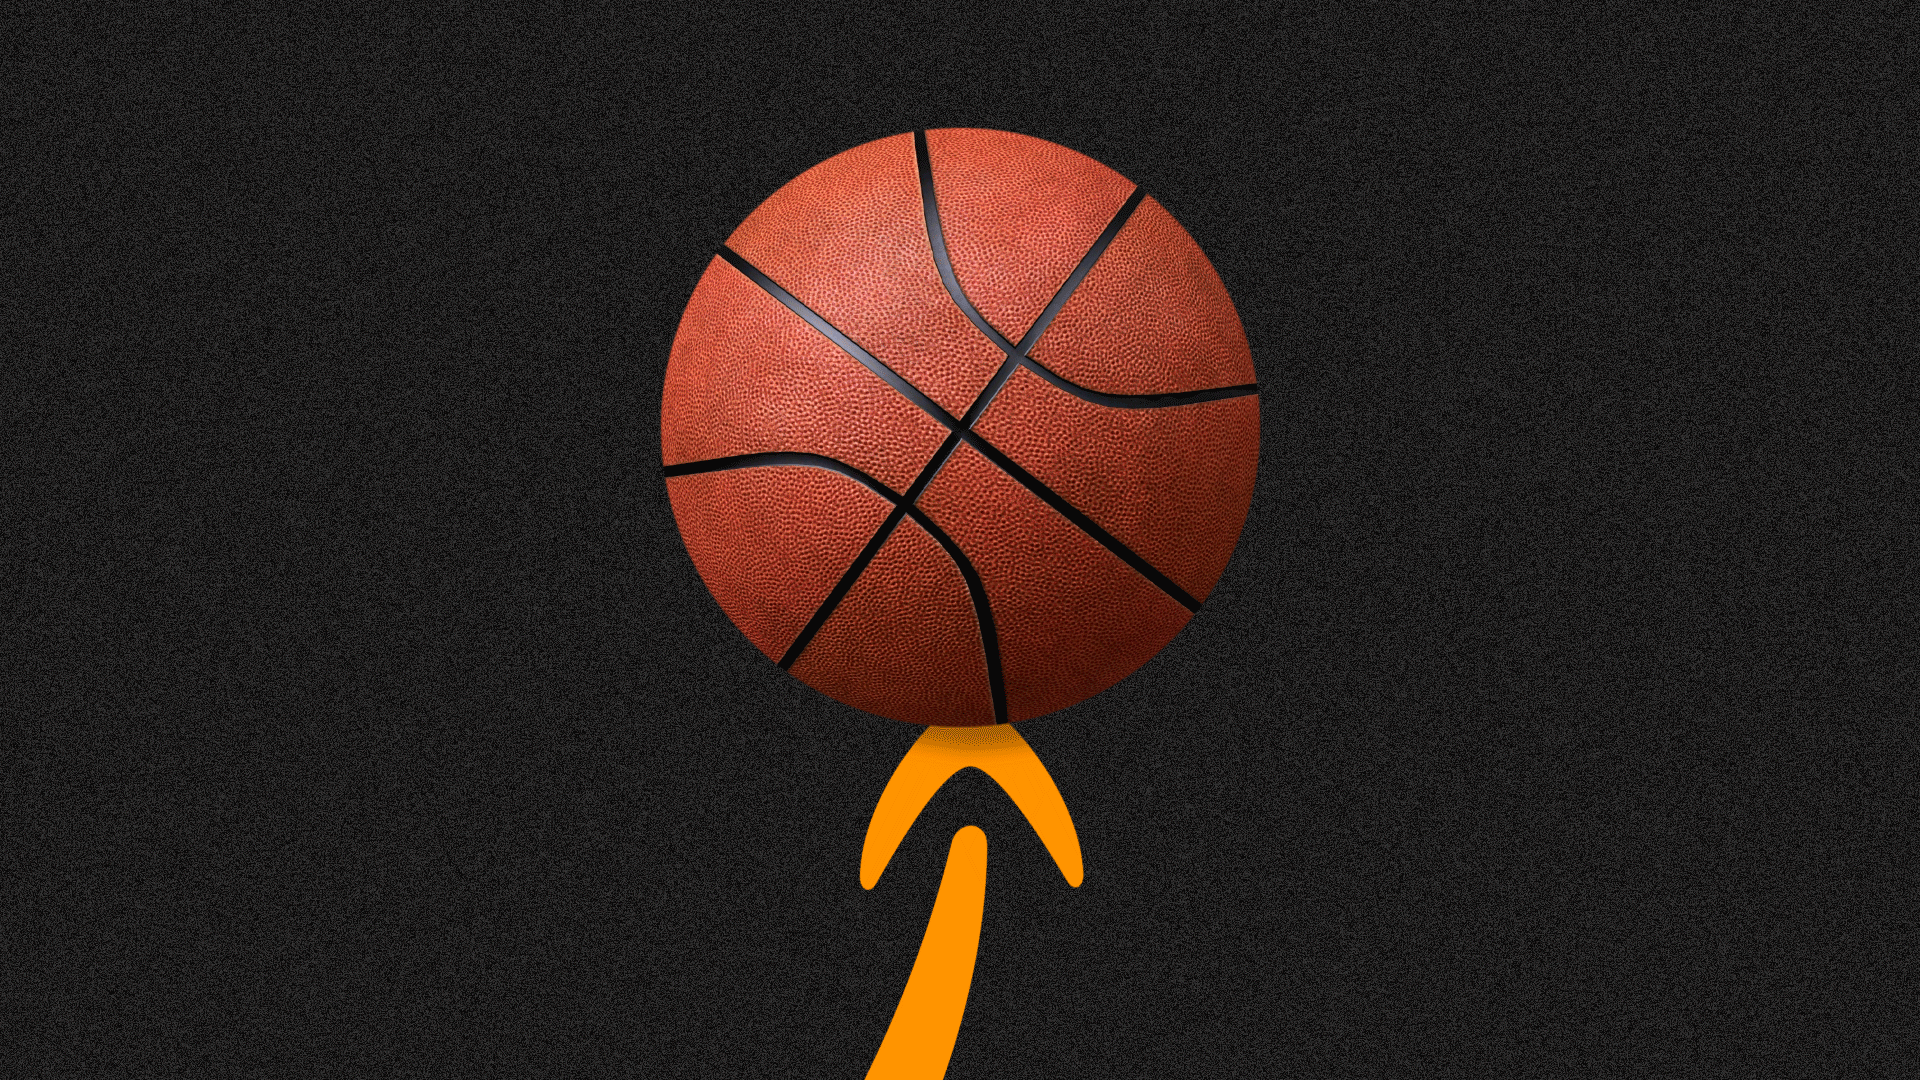 Illustration of a basketball spinning on the Amazon arrow logo